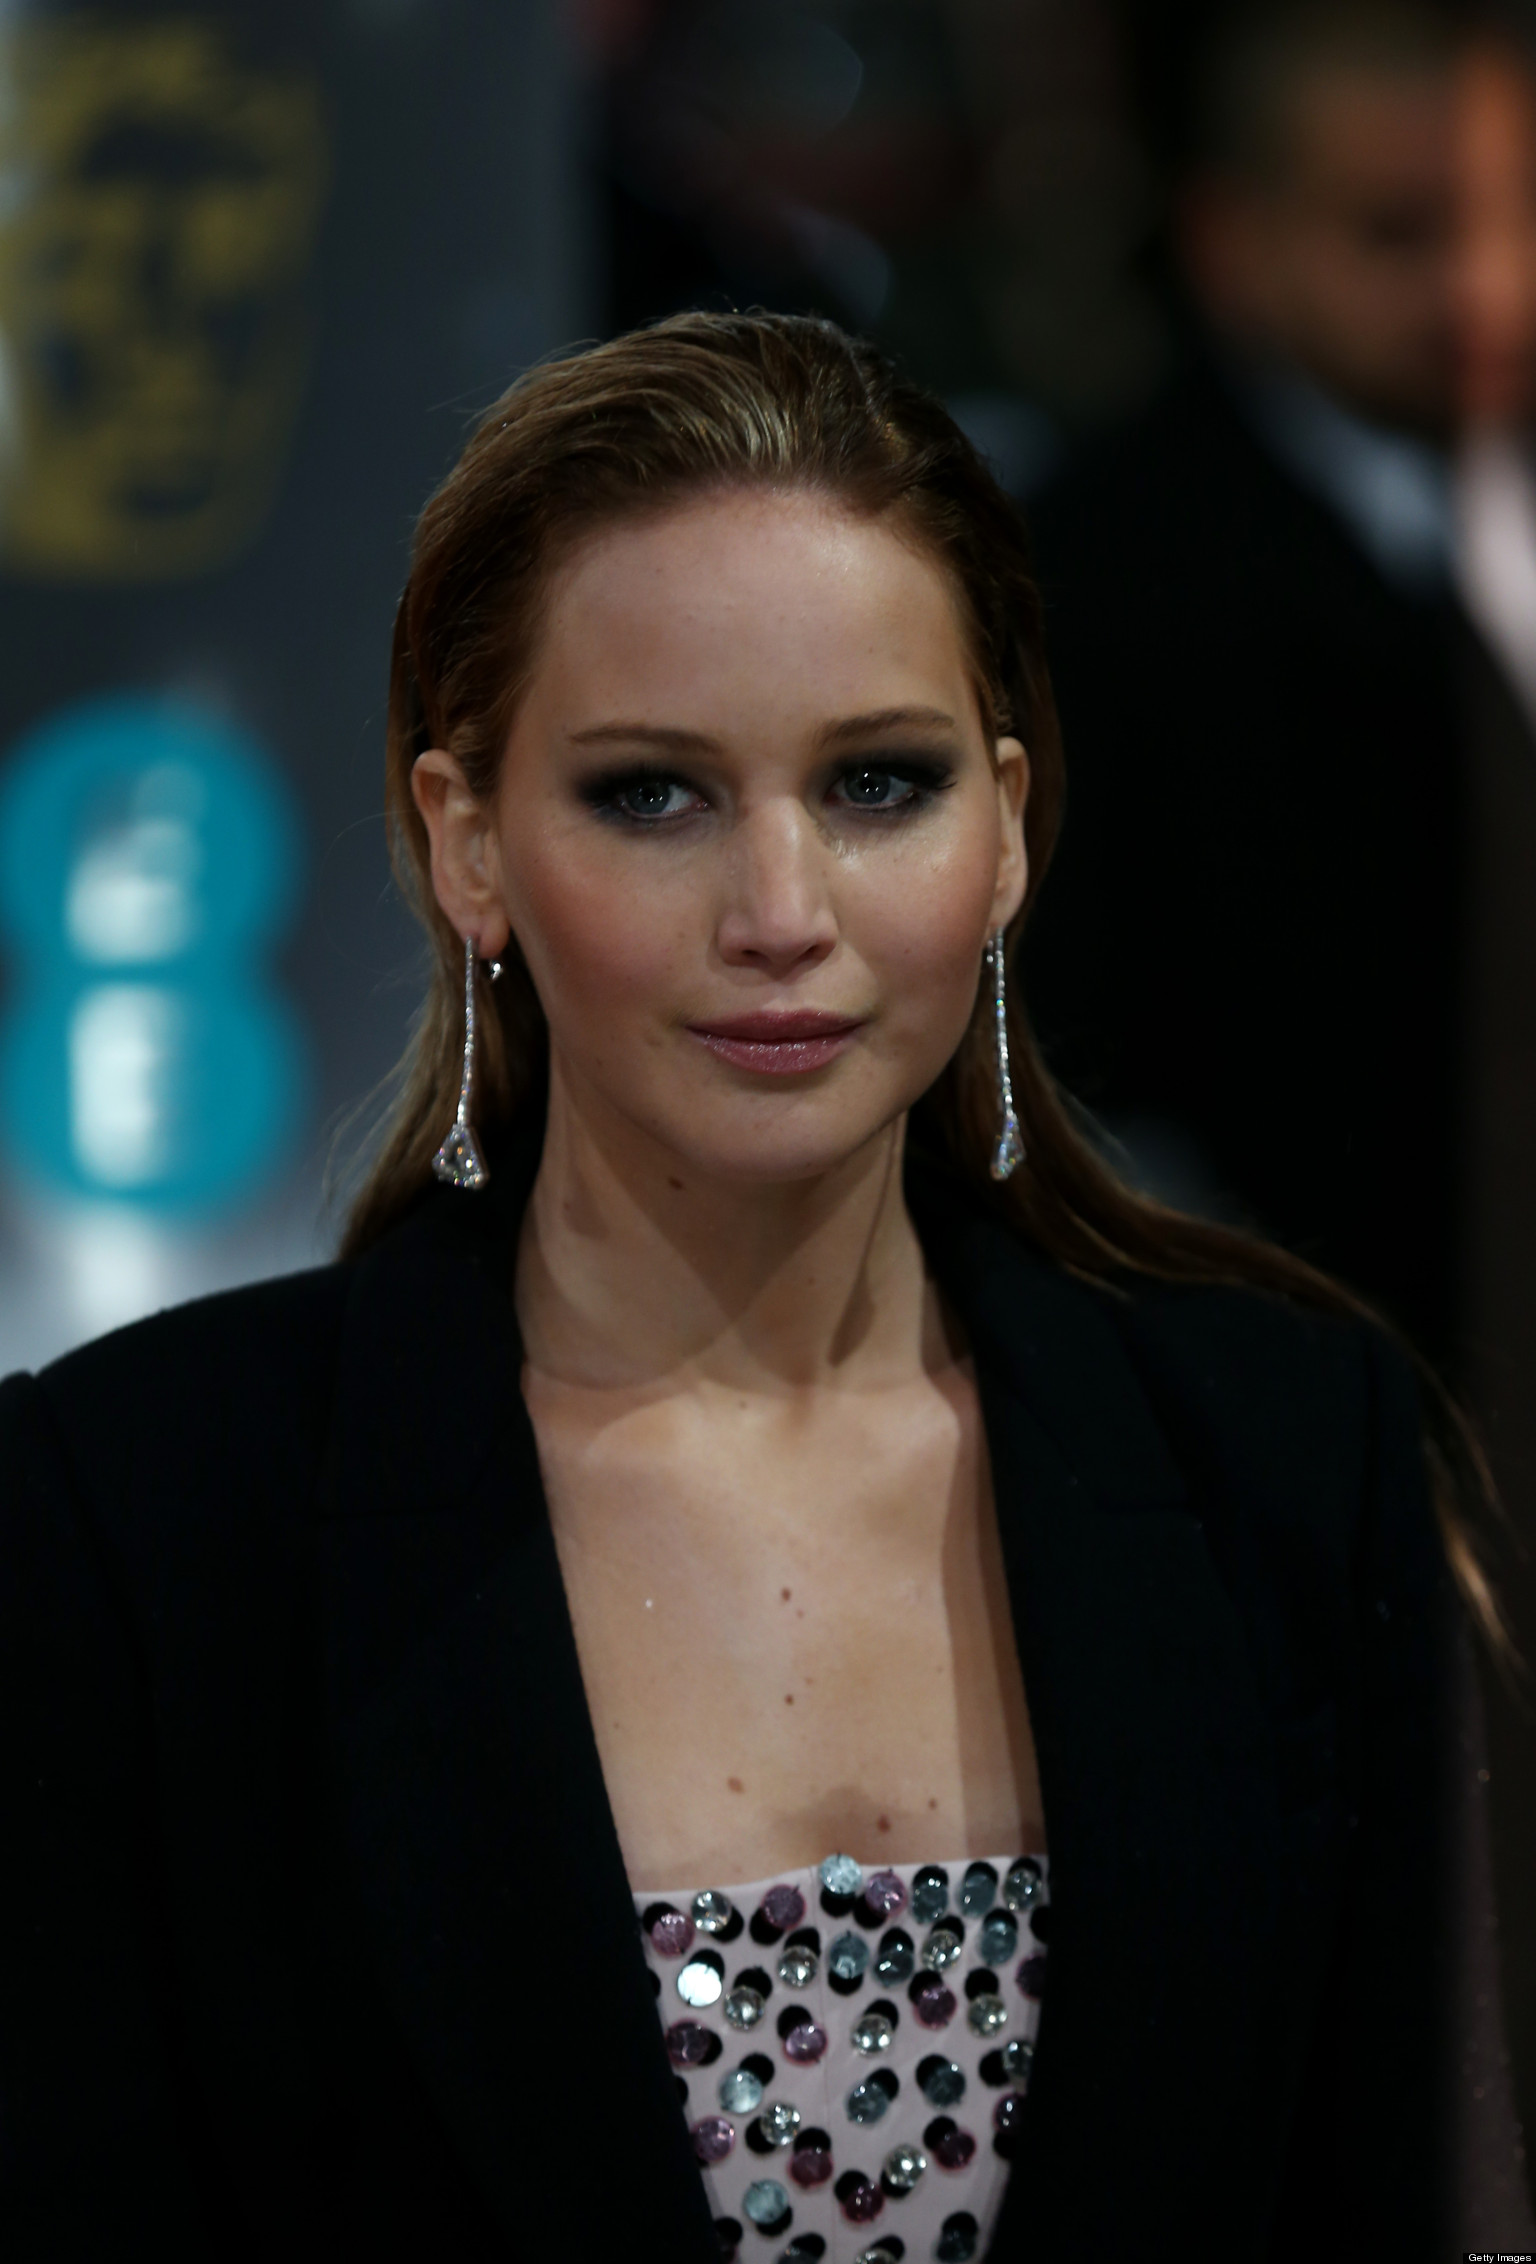 Best Actress Winner Will Jennifer Lawrence Win Her First Academy Award